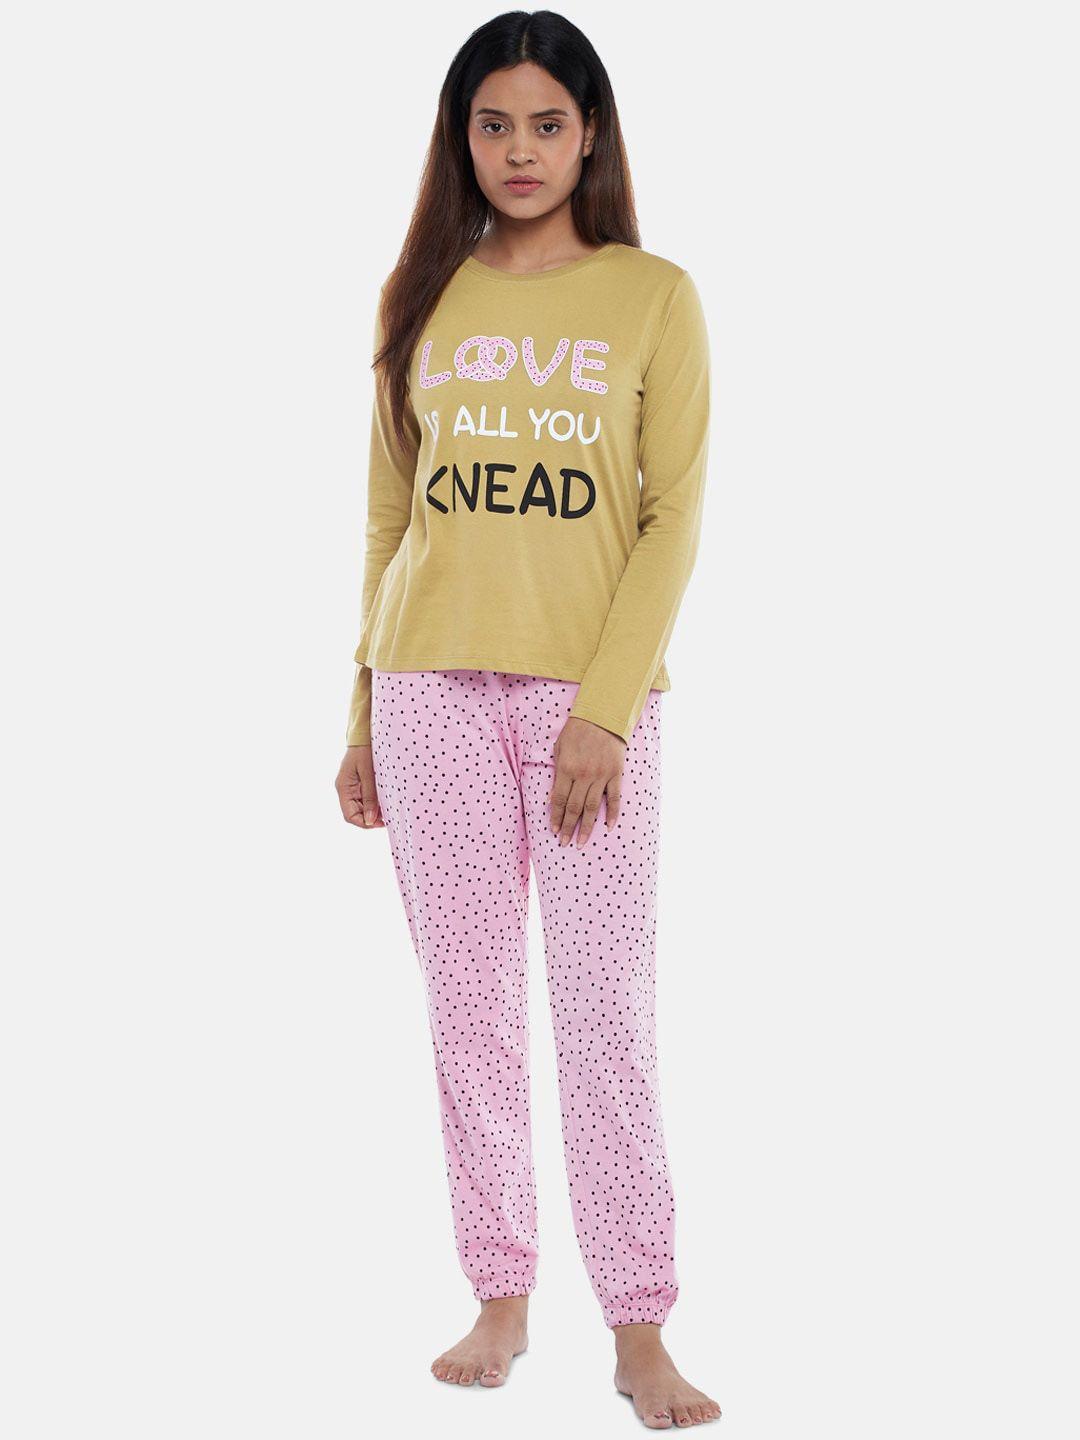 dreamz by pantaloons women khaki & pink printed night suit